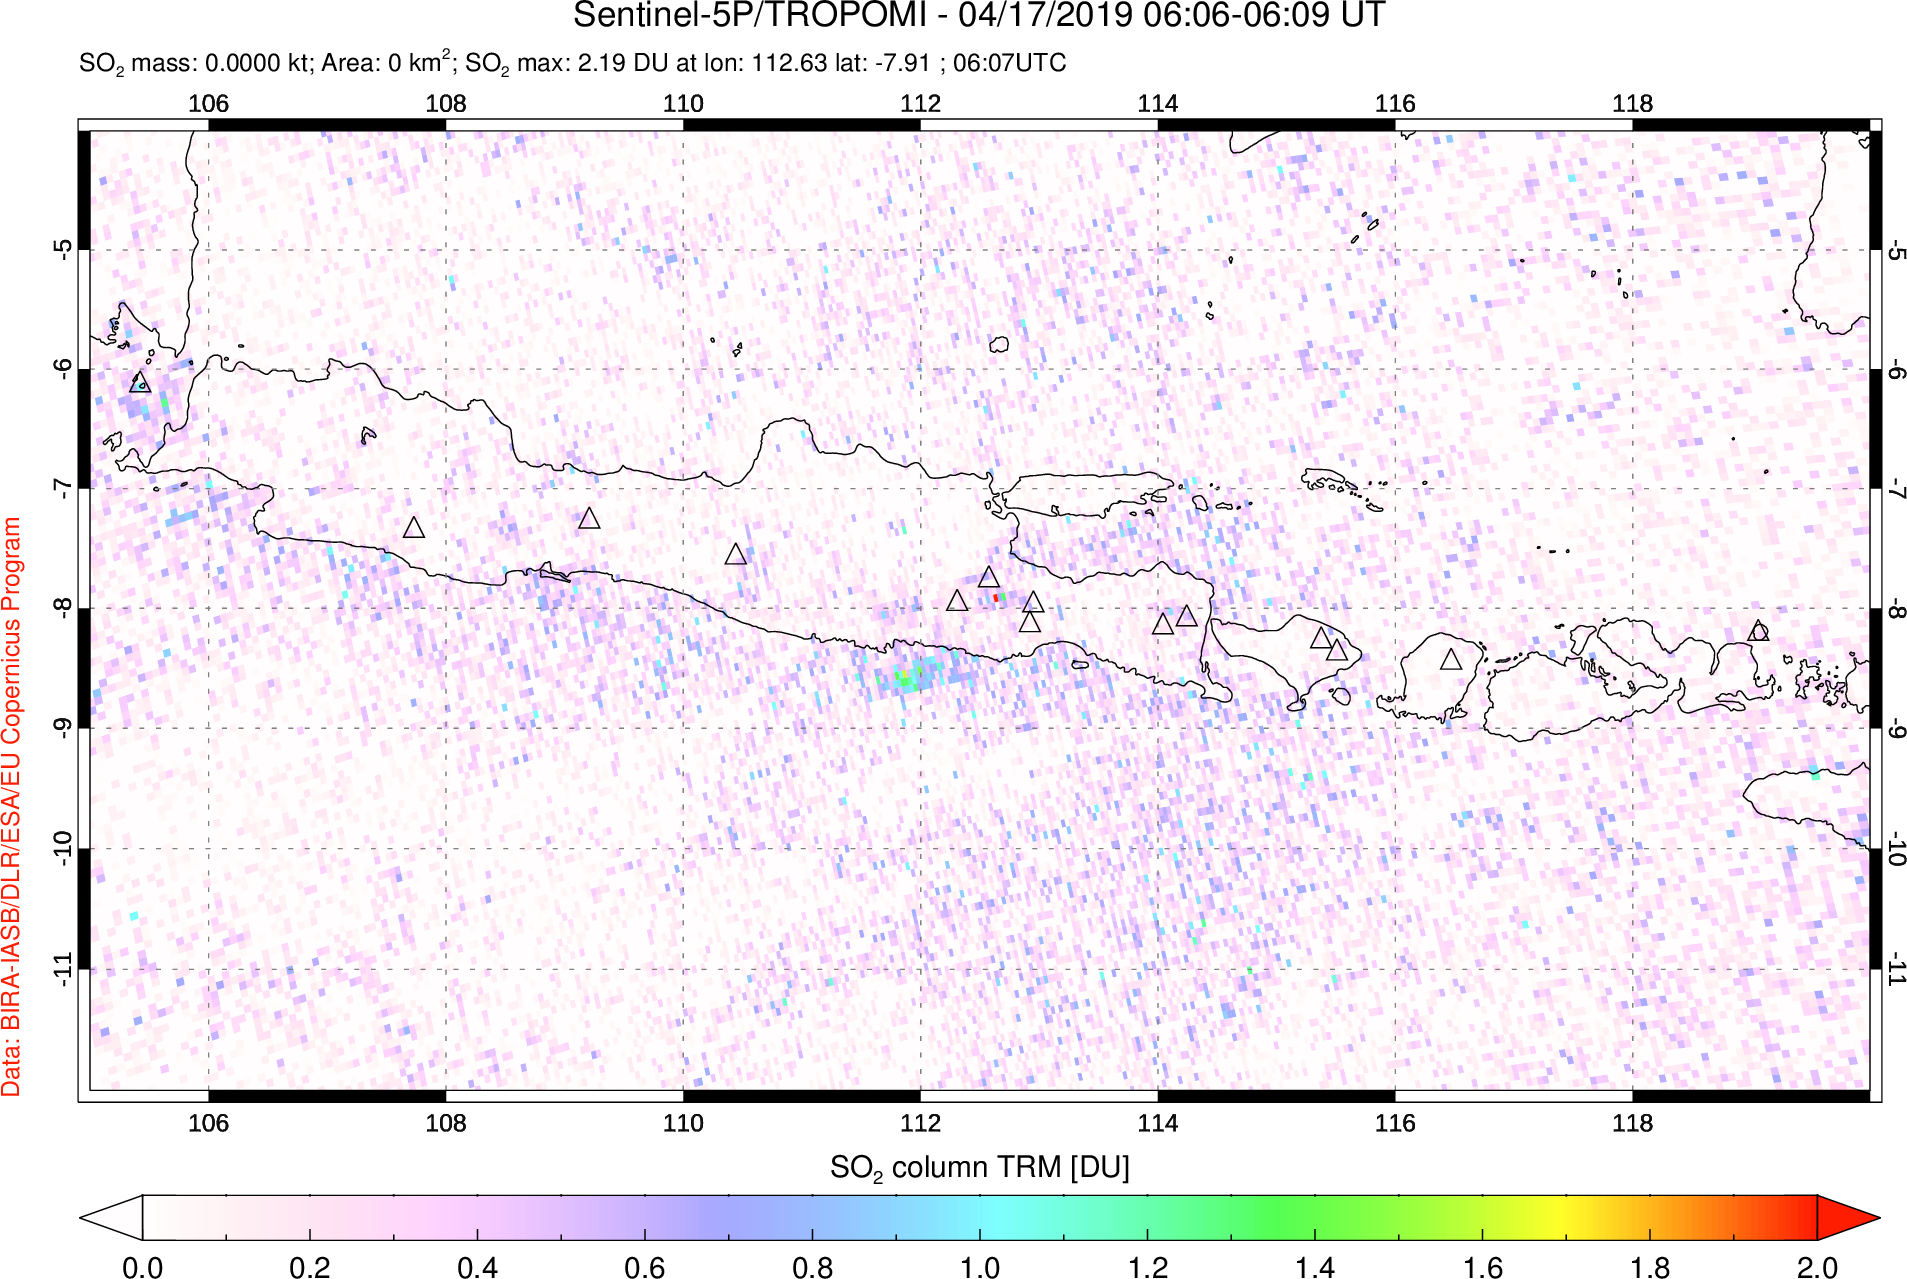 A sulfur dioxide image over Java, Indonesia on Apr 17, 2019.